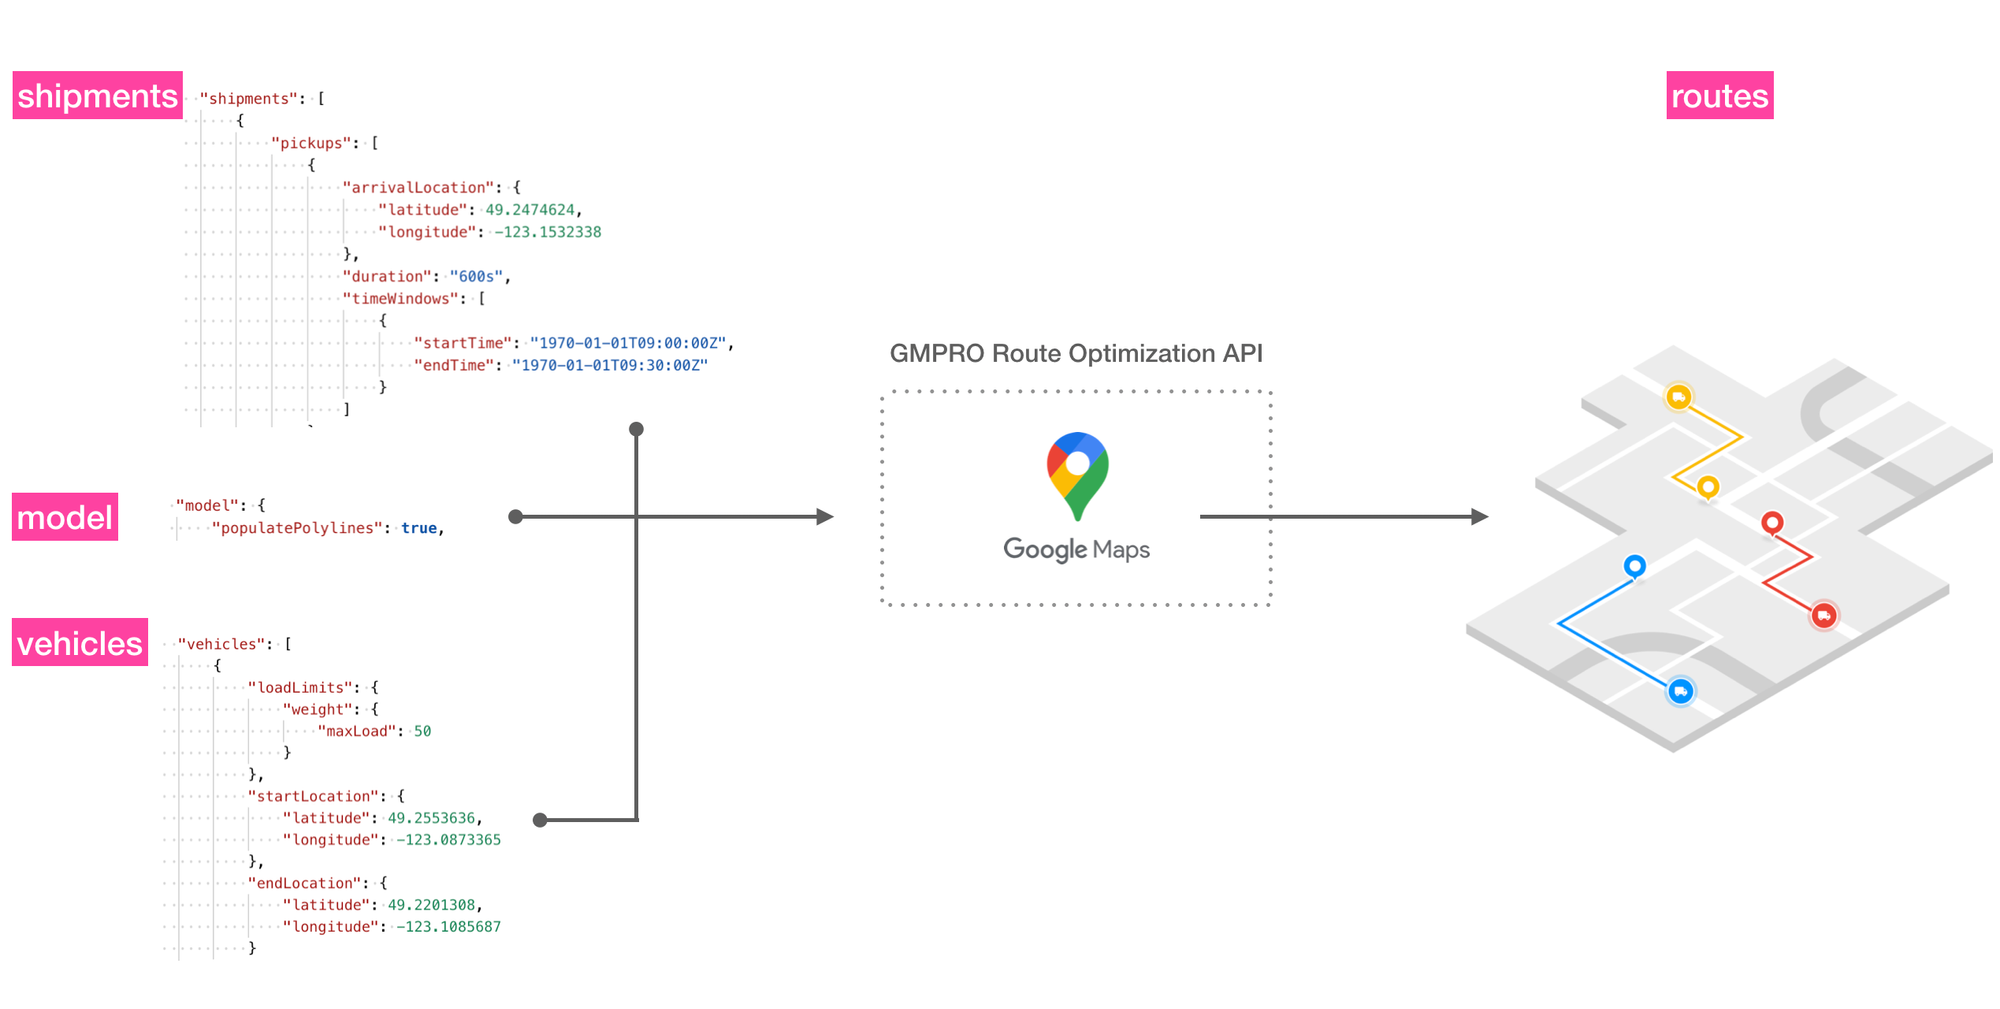 How the GMPRO Google route optimization API works